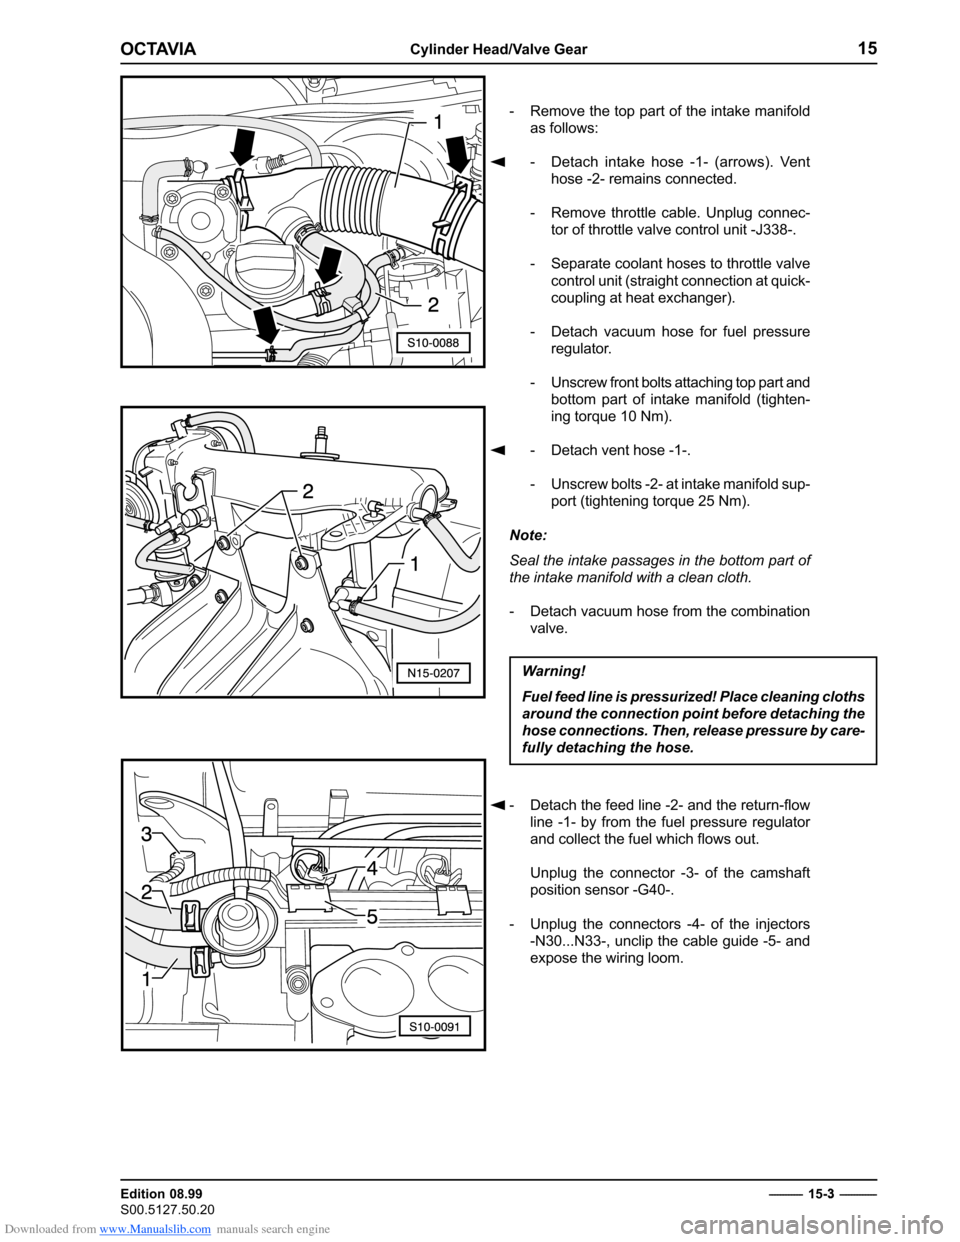 SKODA OCTAVIA 2000 1.G / (1U) 2.0 85kw Engine Repair Manual Downloaded from www.Manualslib.com manuals search engine ���������������������������������
������������� 
��������������������������������� �������������
� ������������������������������������������
�